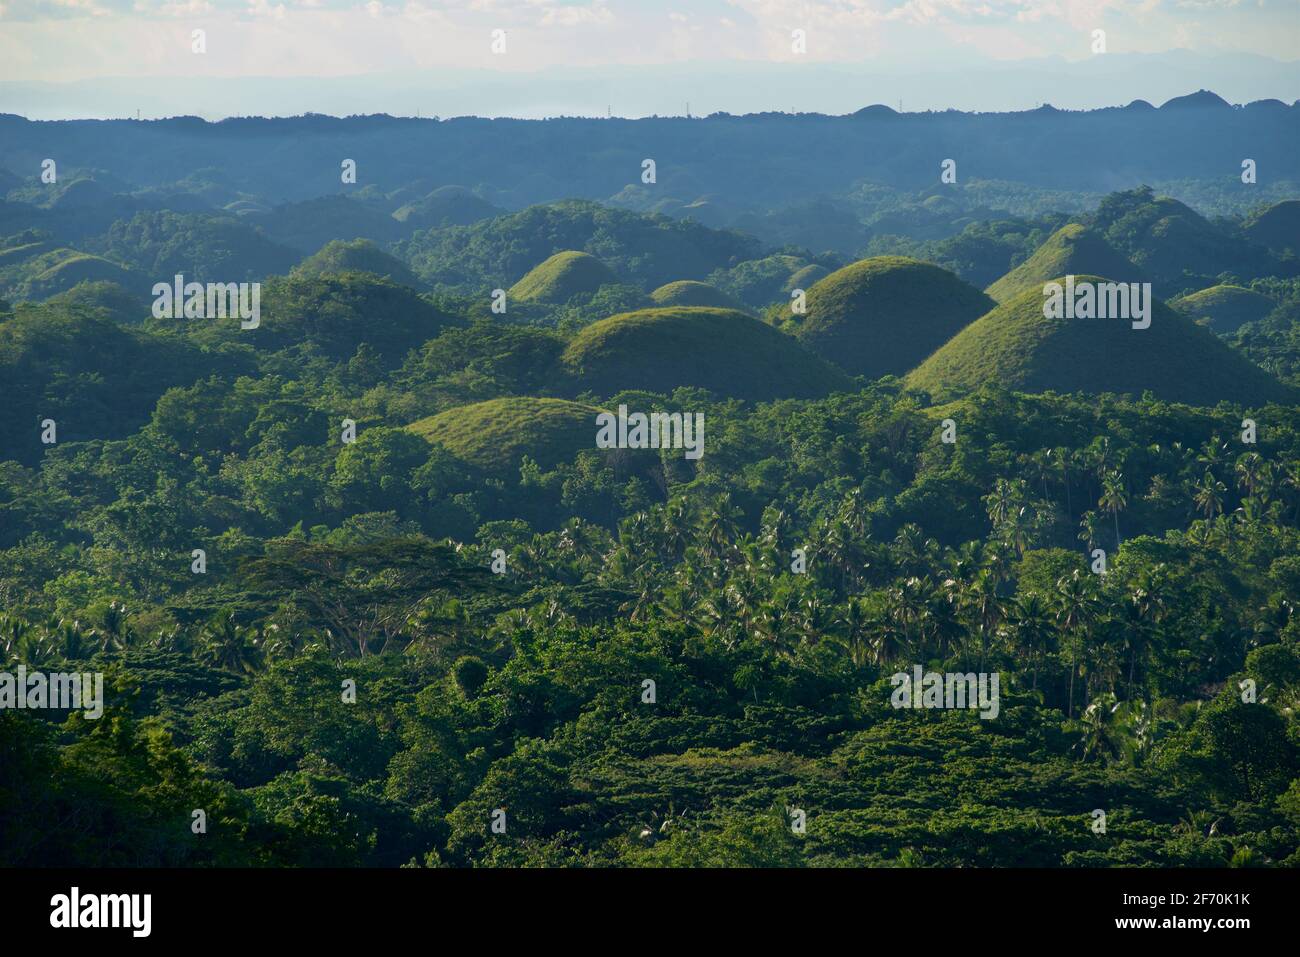 Blick auf die „Chocolate Hills“, Carmen, Provinz Bohol, Philippinen, Südostasien. Bekannt in Cebuano als MGA Bungtod sa Tsokolate, und in Tagalog als: Tsokolateng burol. Konische KarstlandschaftBlick auf die „Chocolate Hills“, Carmen, Provinz Bohol, Philippinen, Südostasien. Bekannt in Cebuano als MGA Bungtod sa Tsokolate, und in Tagalog als: Tsokolateng burol. Konische Karstlandschaft Stockfoto